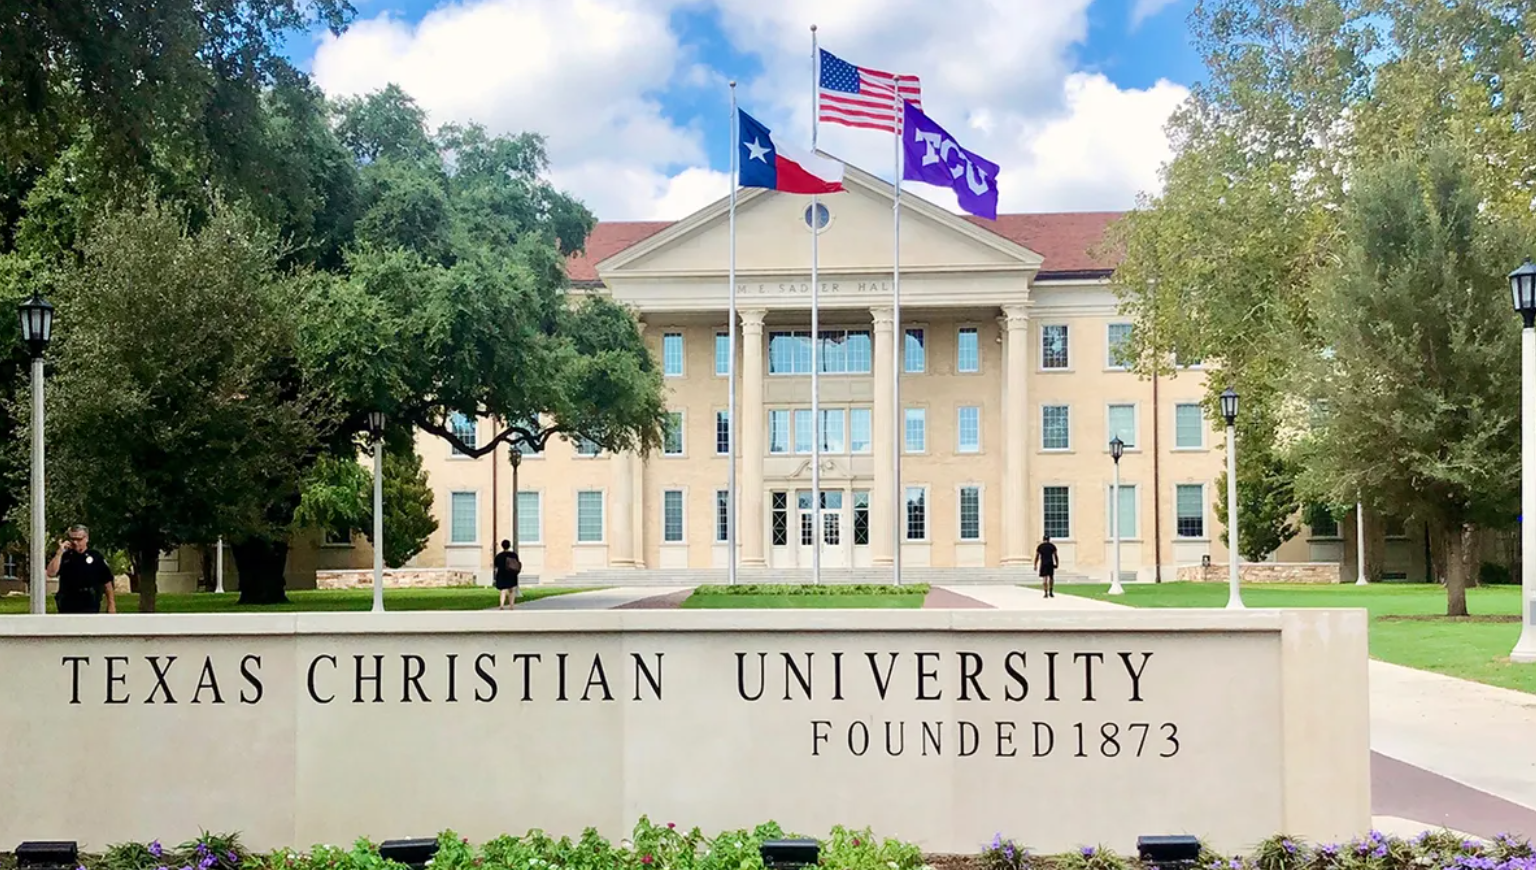 Brief History of the Texas Christian University (TCU)